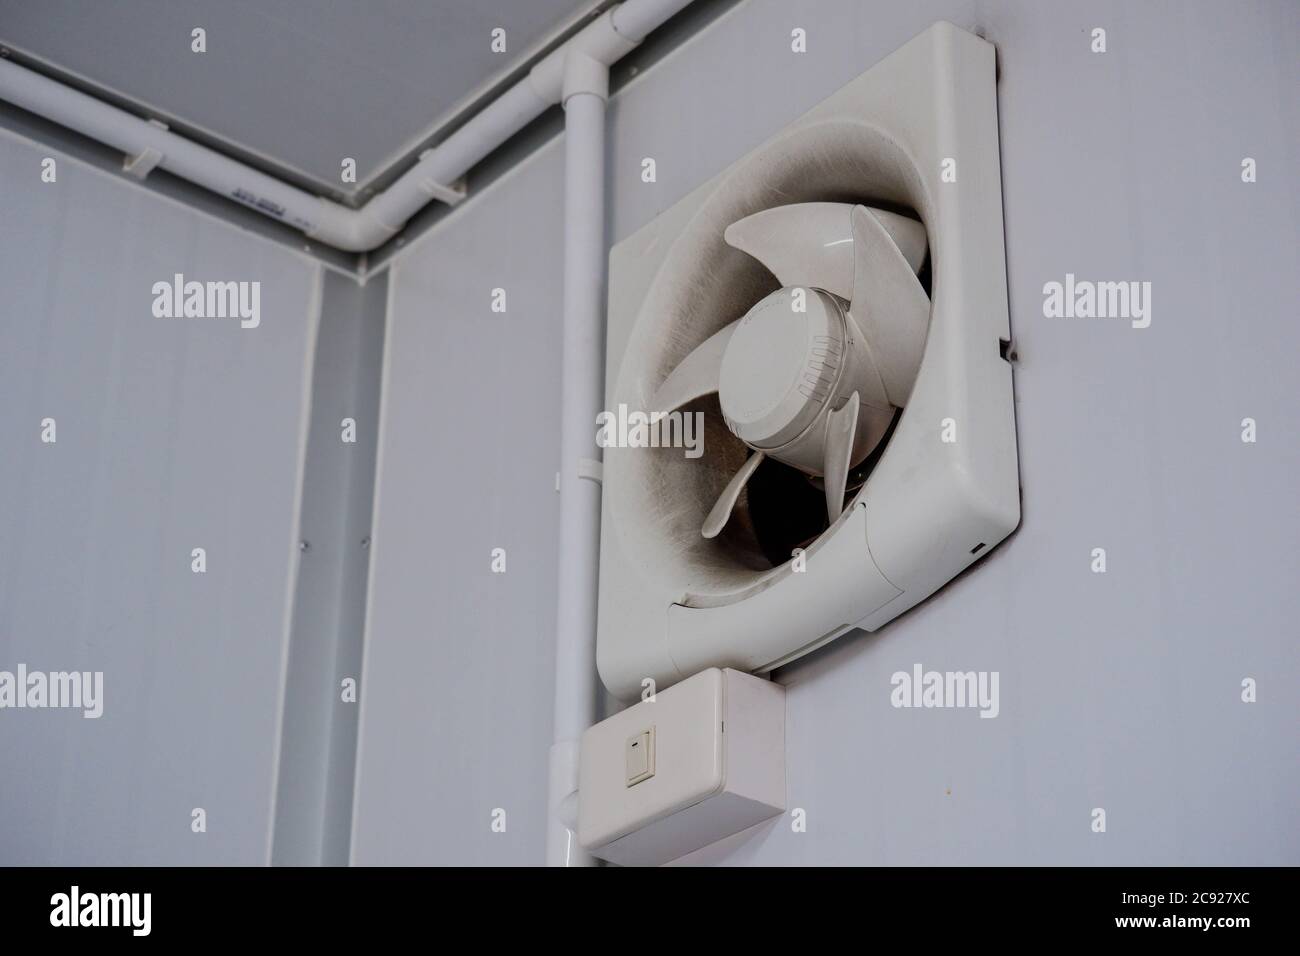 Ventilator schneidet Flugblätter, um den Raum zu lüften Stockfotografie -  Alamy